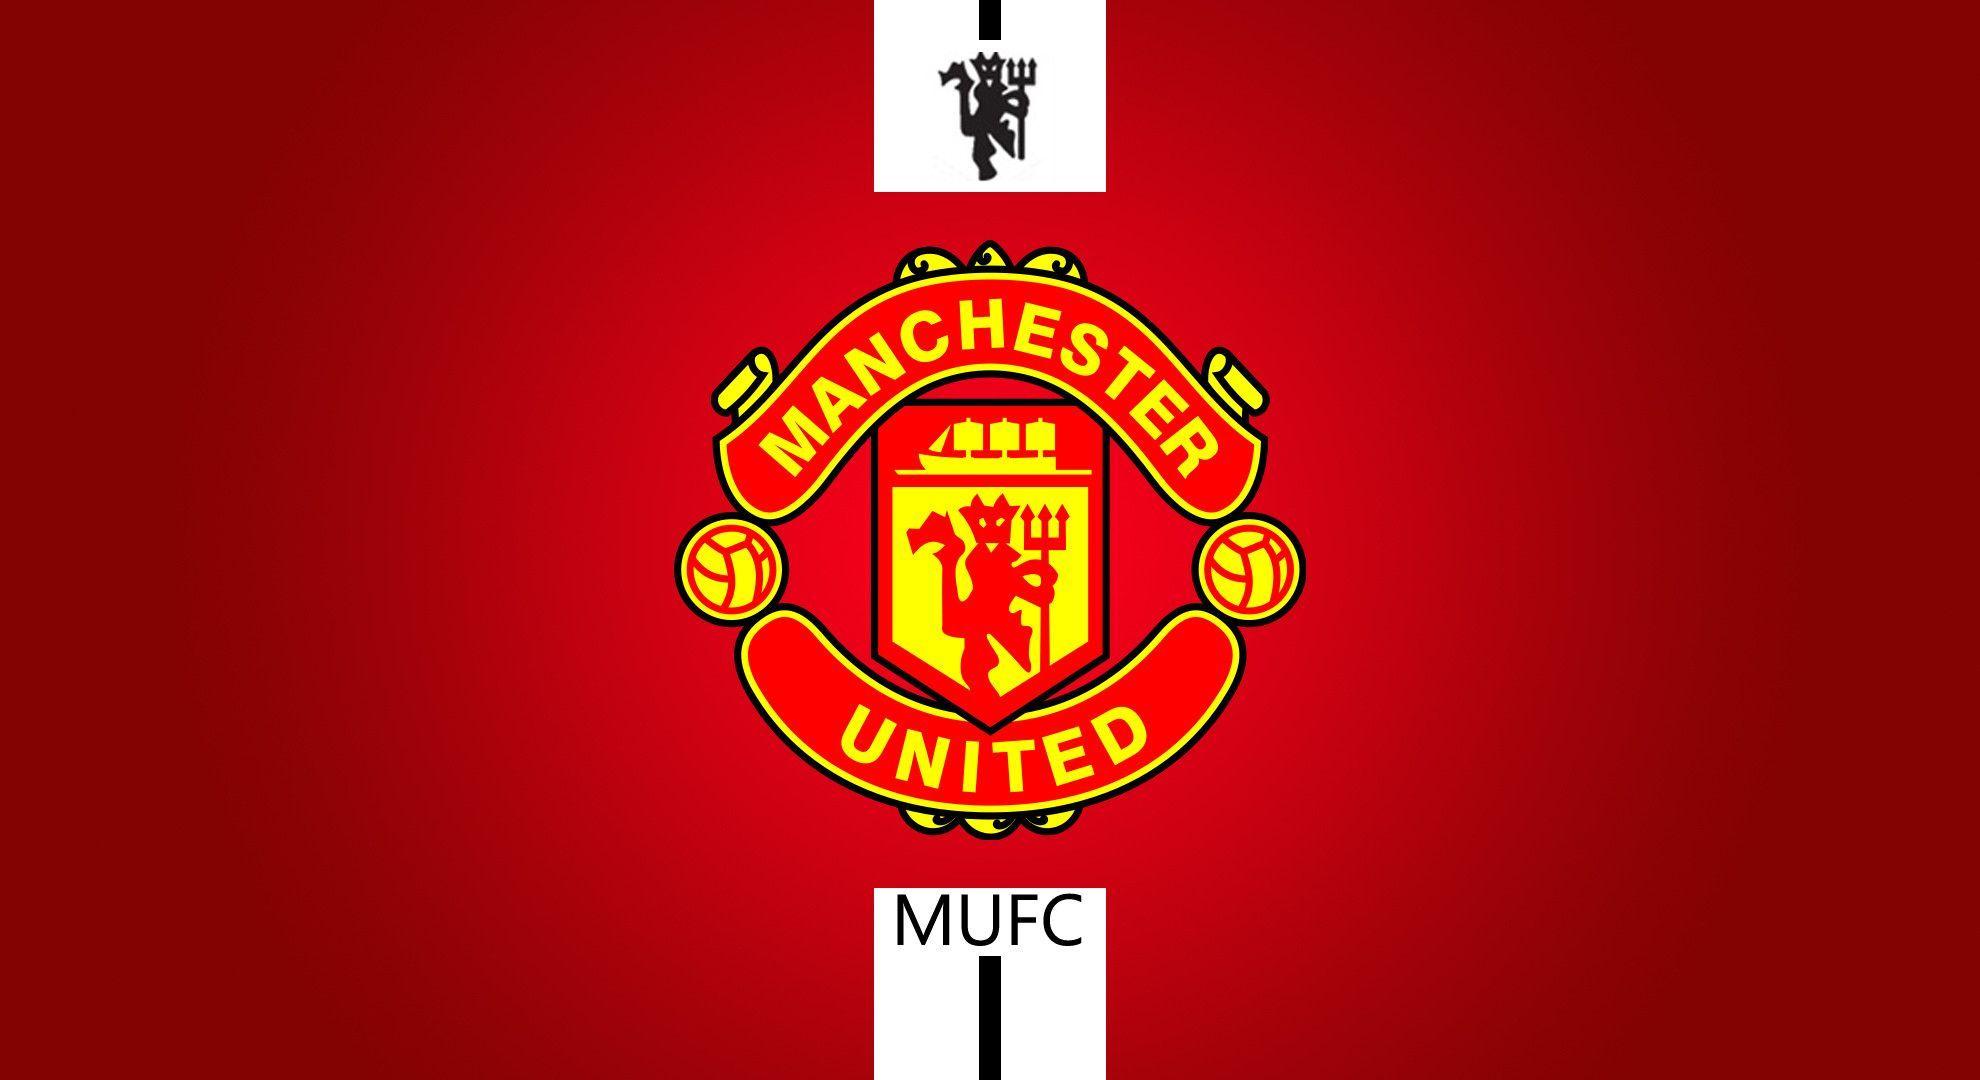 Manchester United Desktop